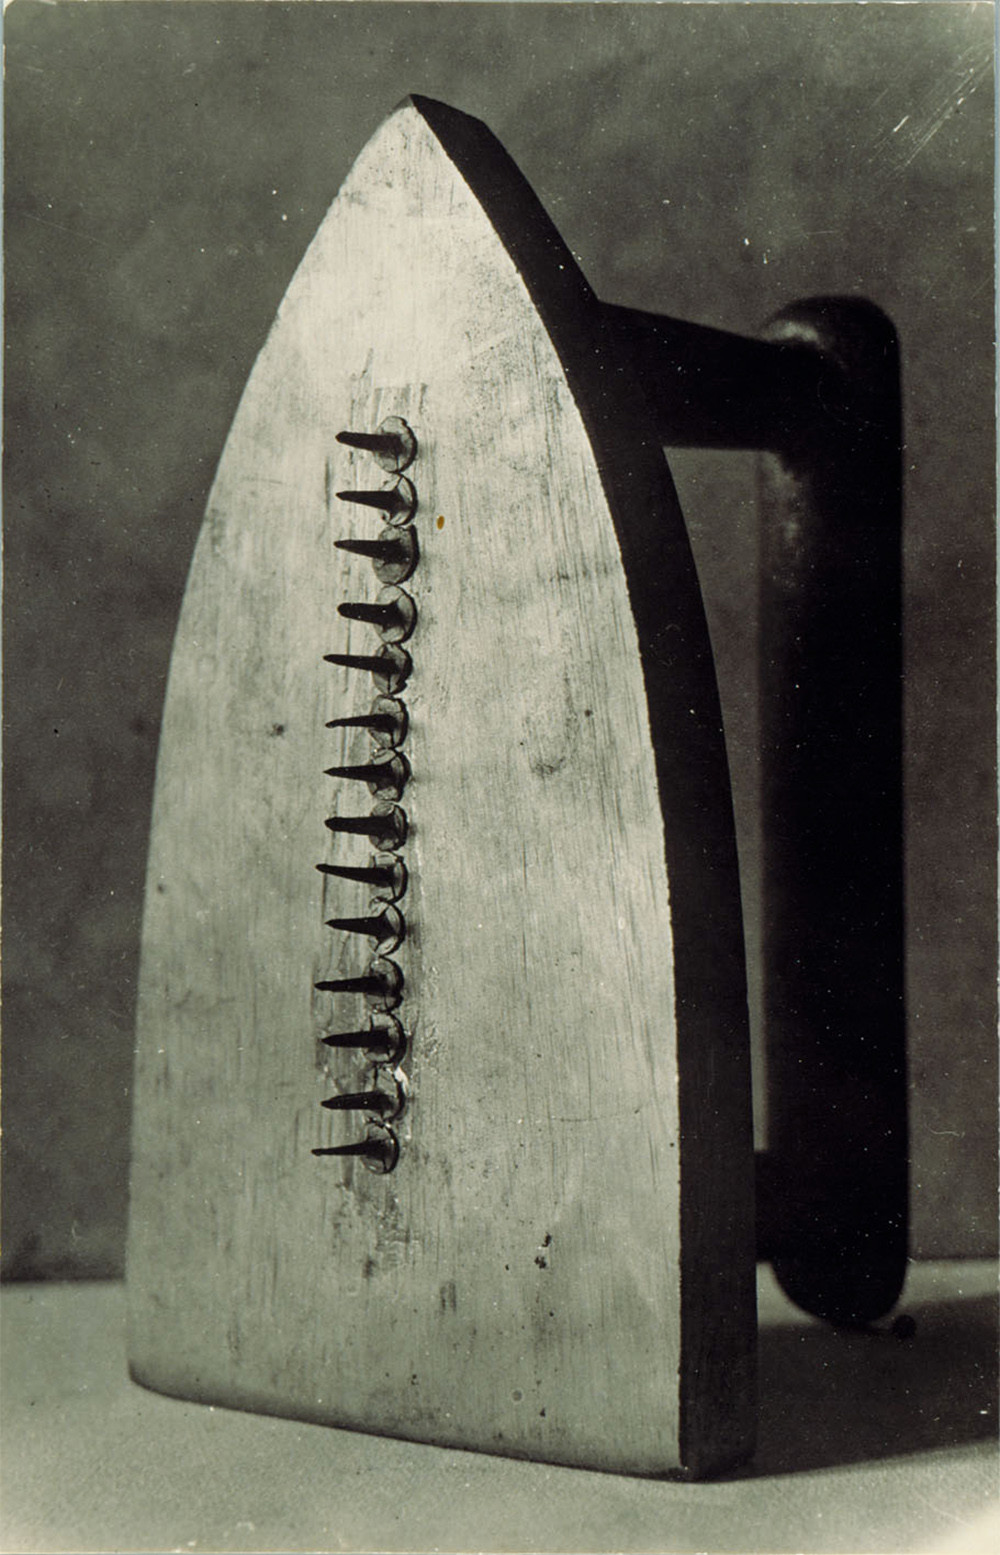 Man Ray, "Le cadeau", 1921.